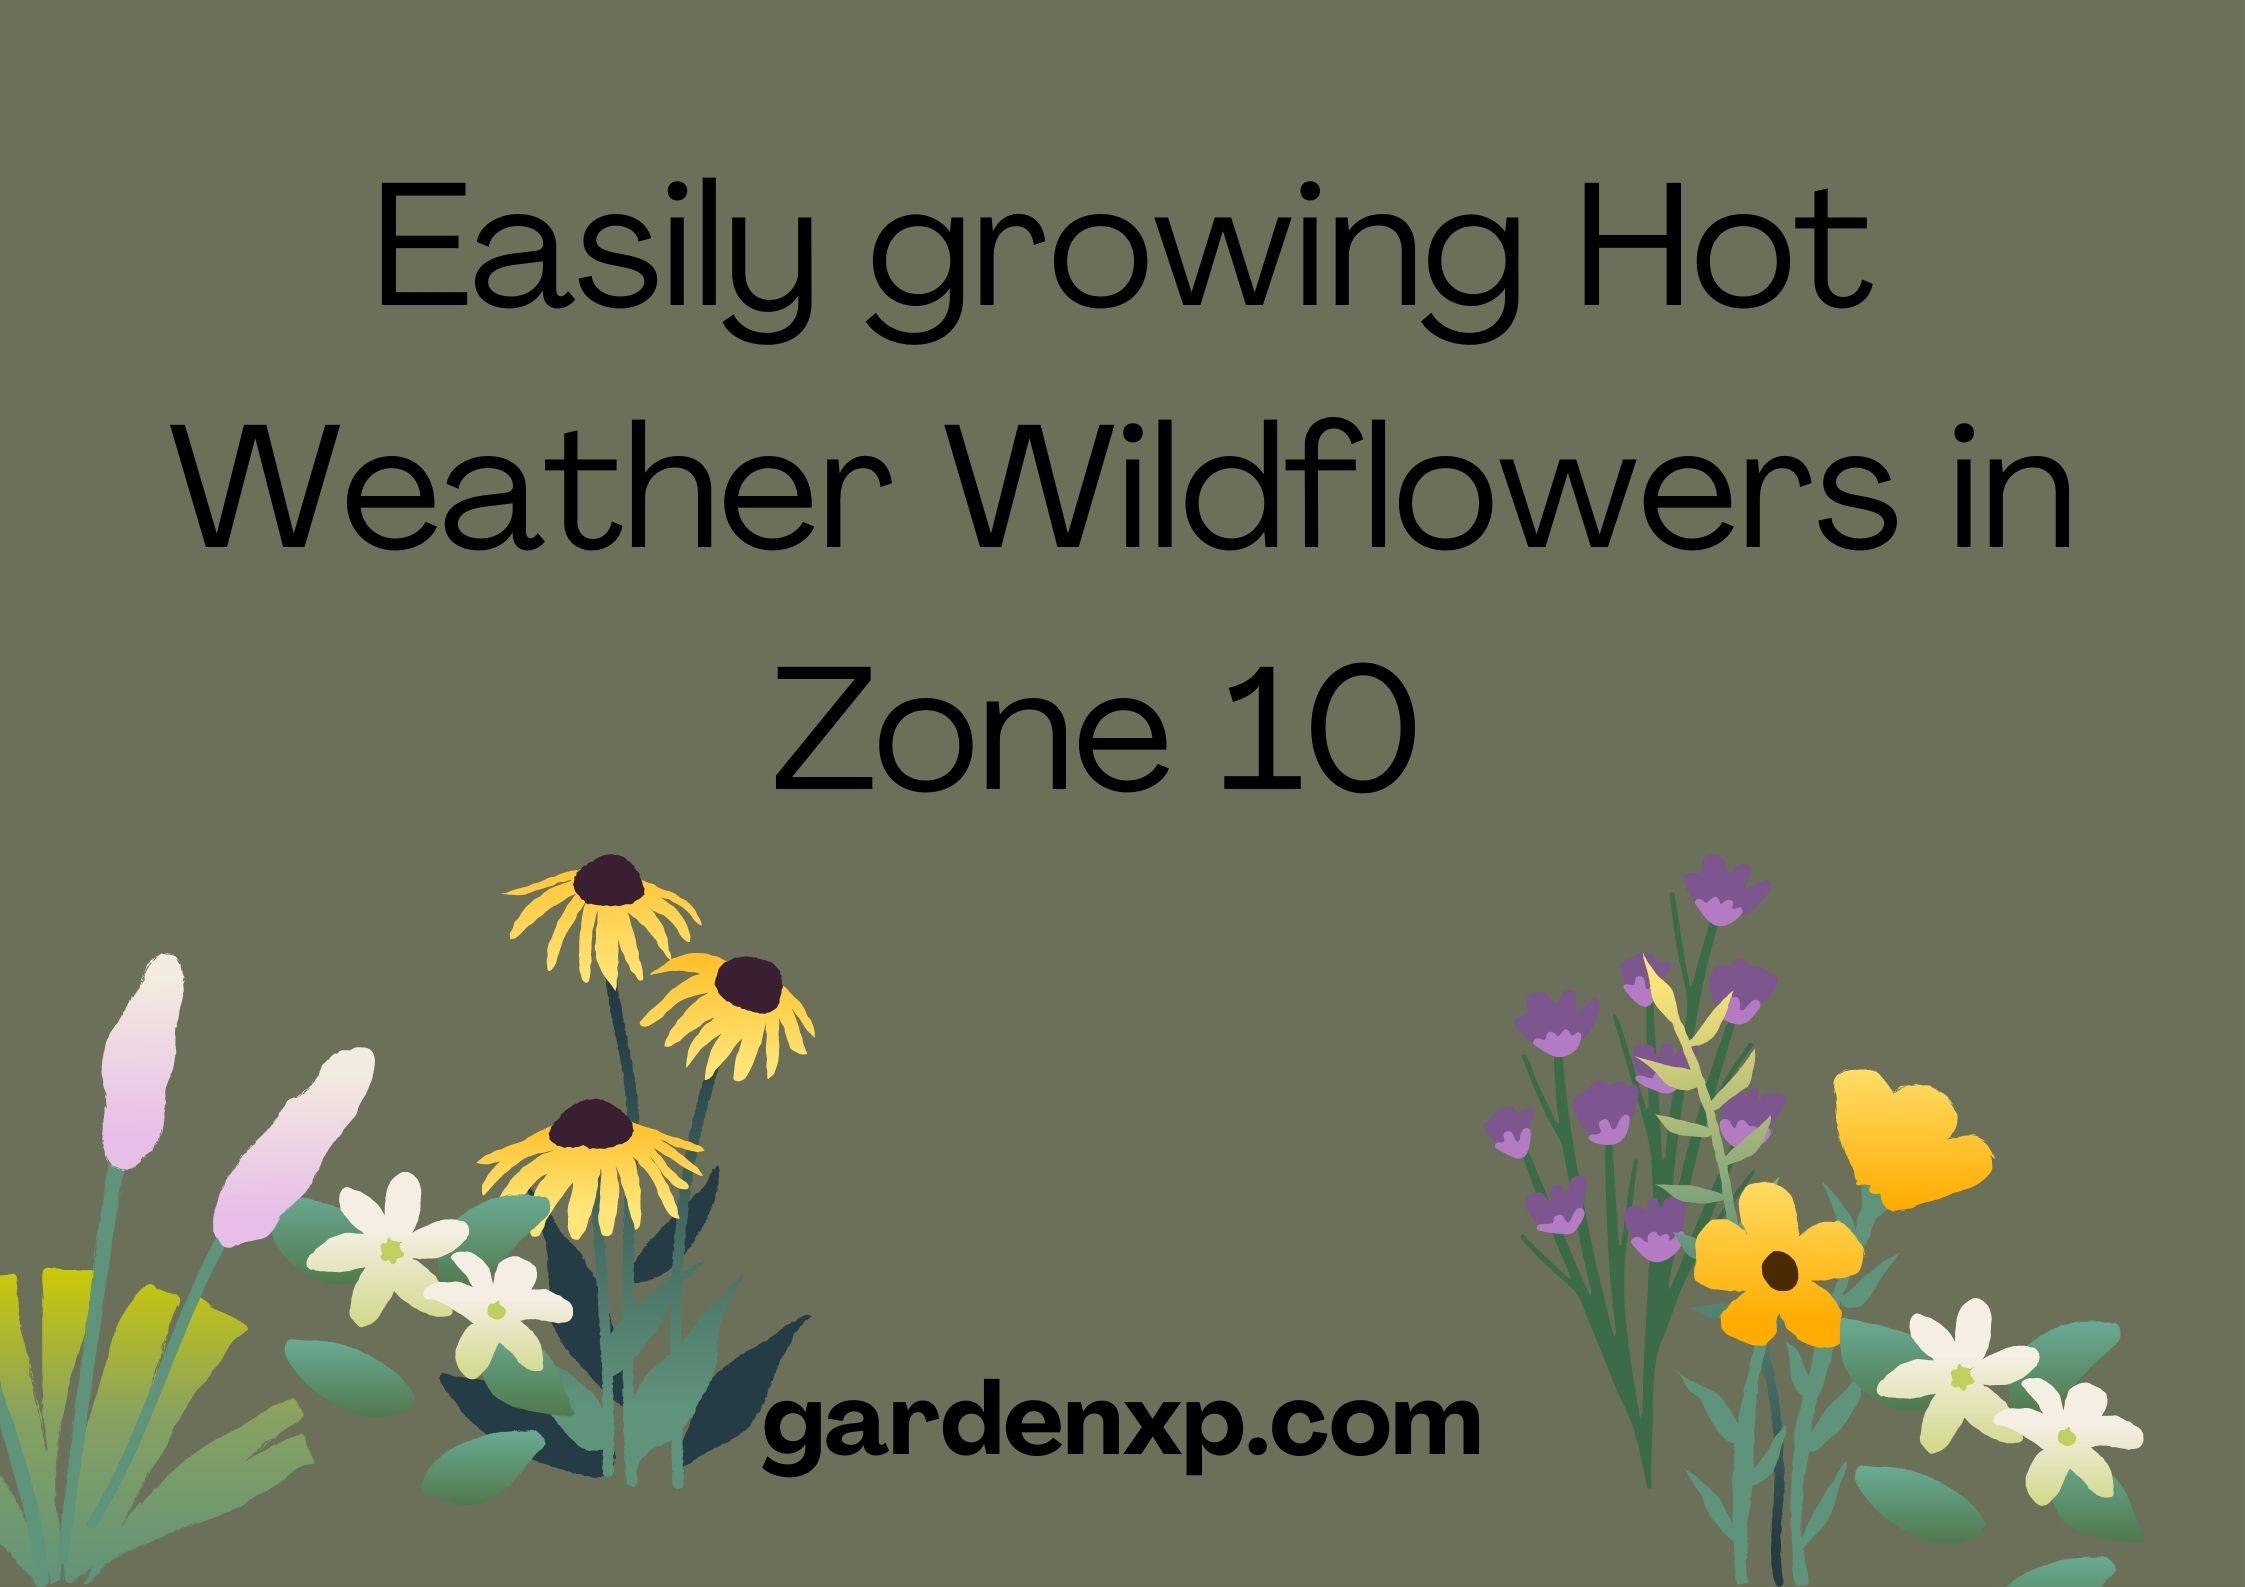 Best Hot Weather Wildflowers - Growing Wildflowers in Zone 10